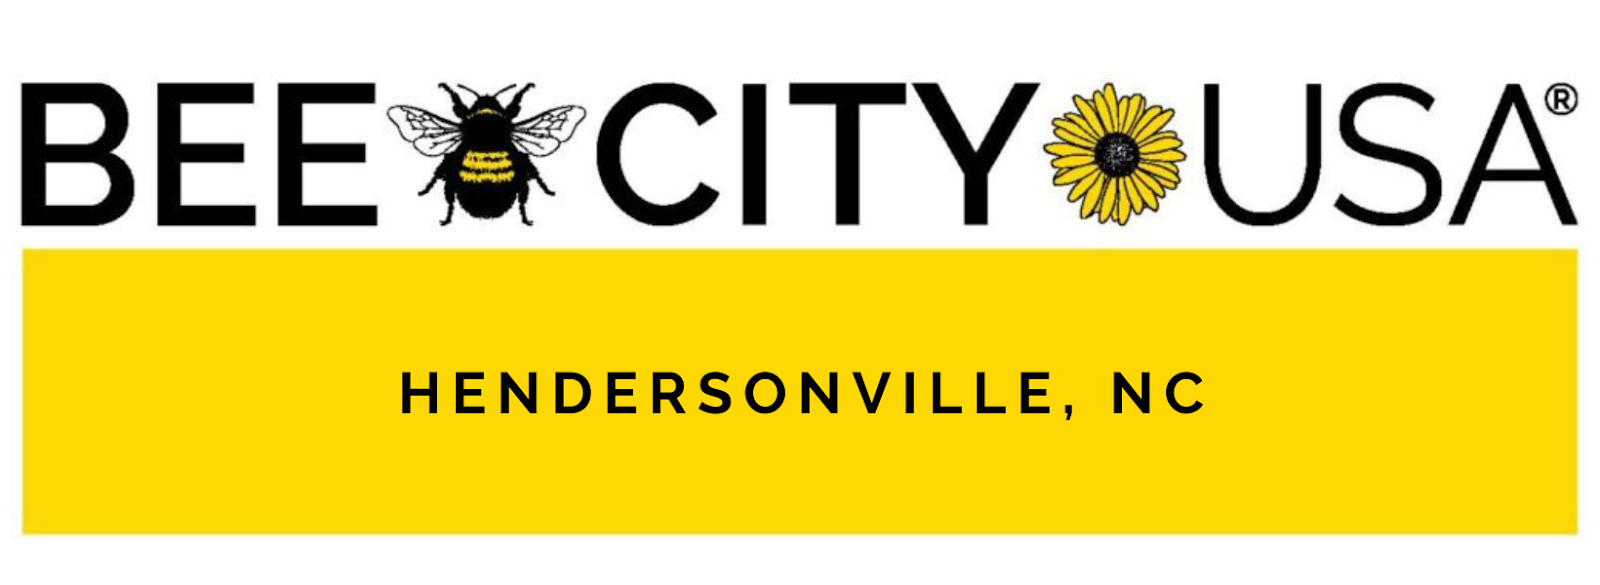 Bee City USA logo 